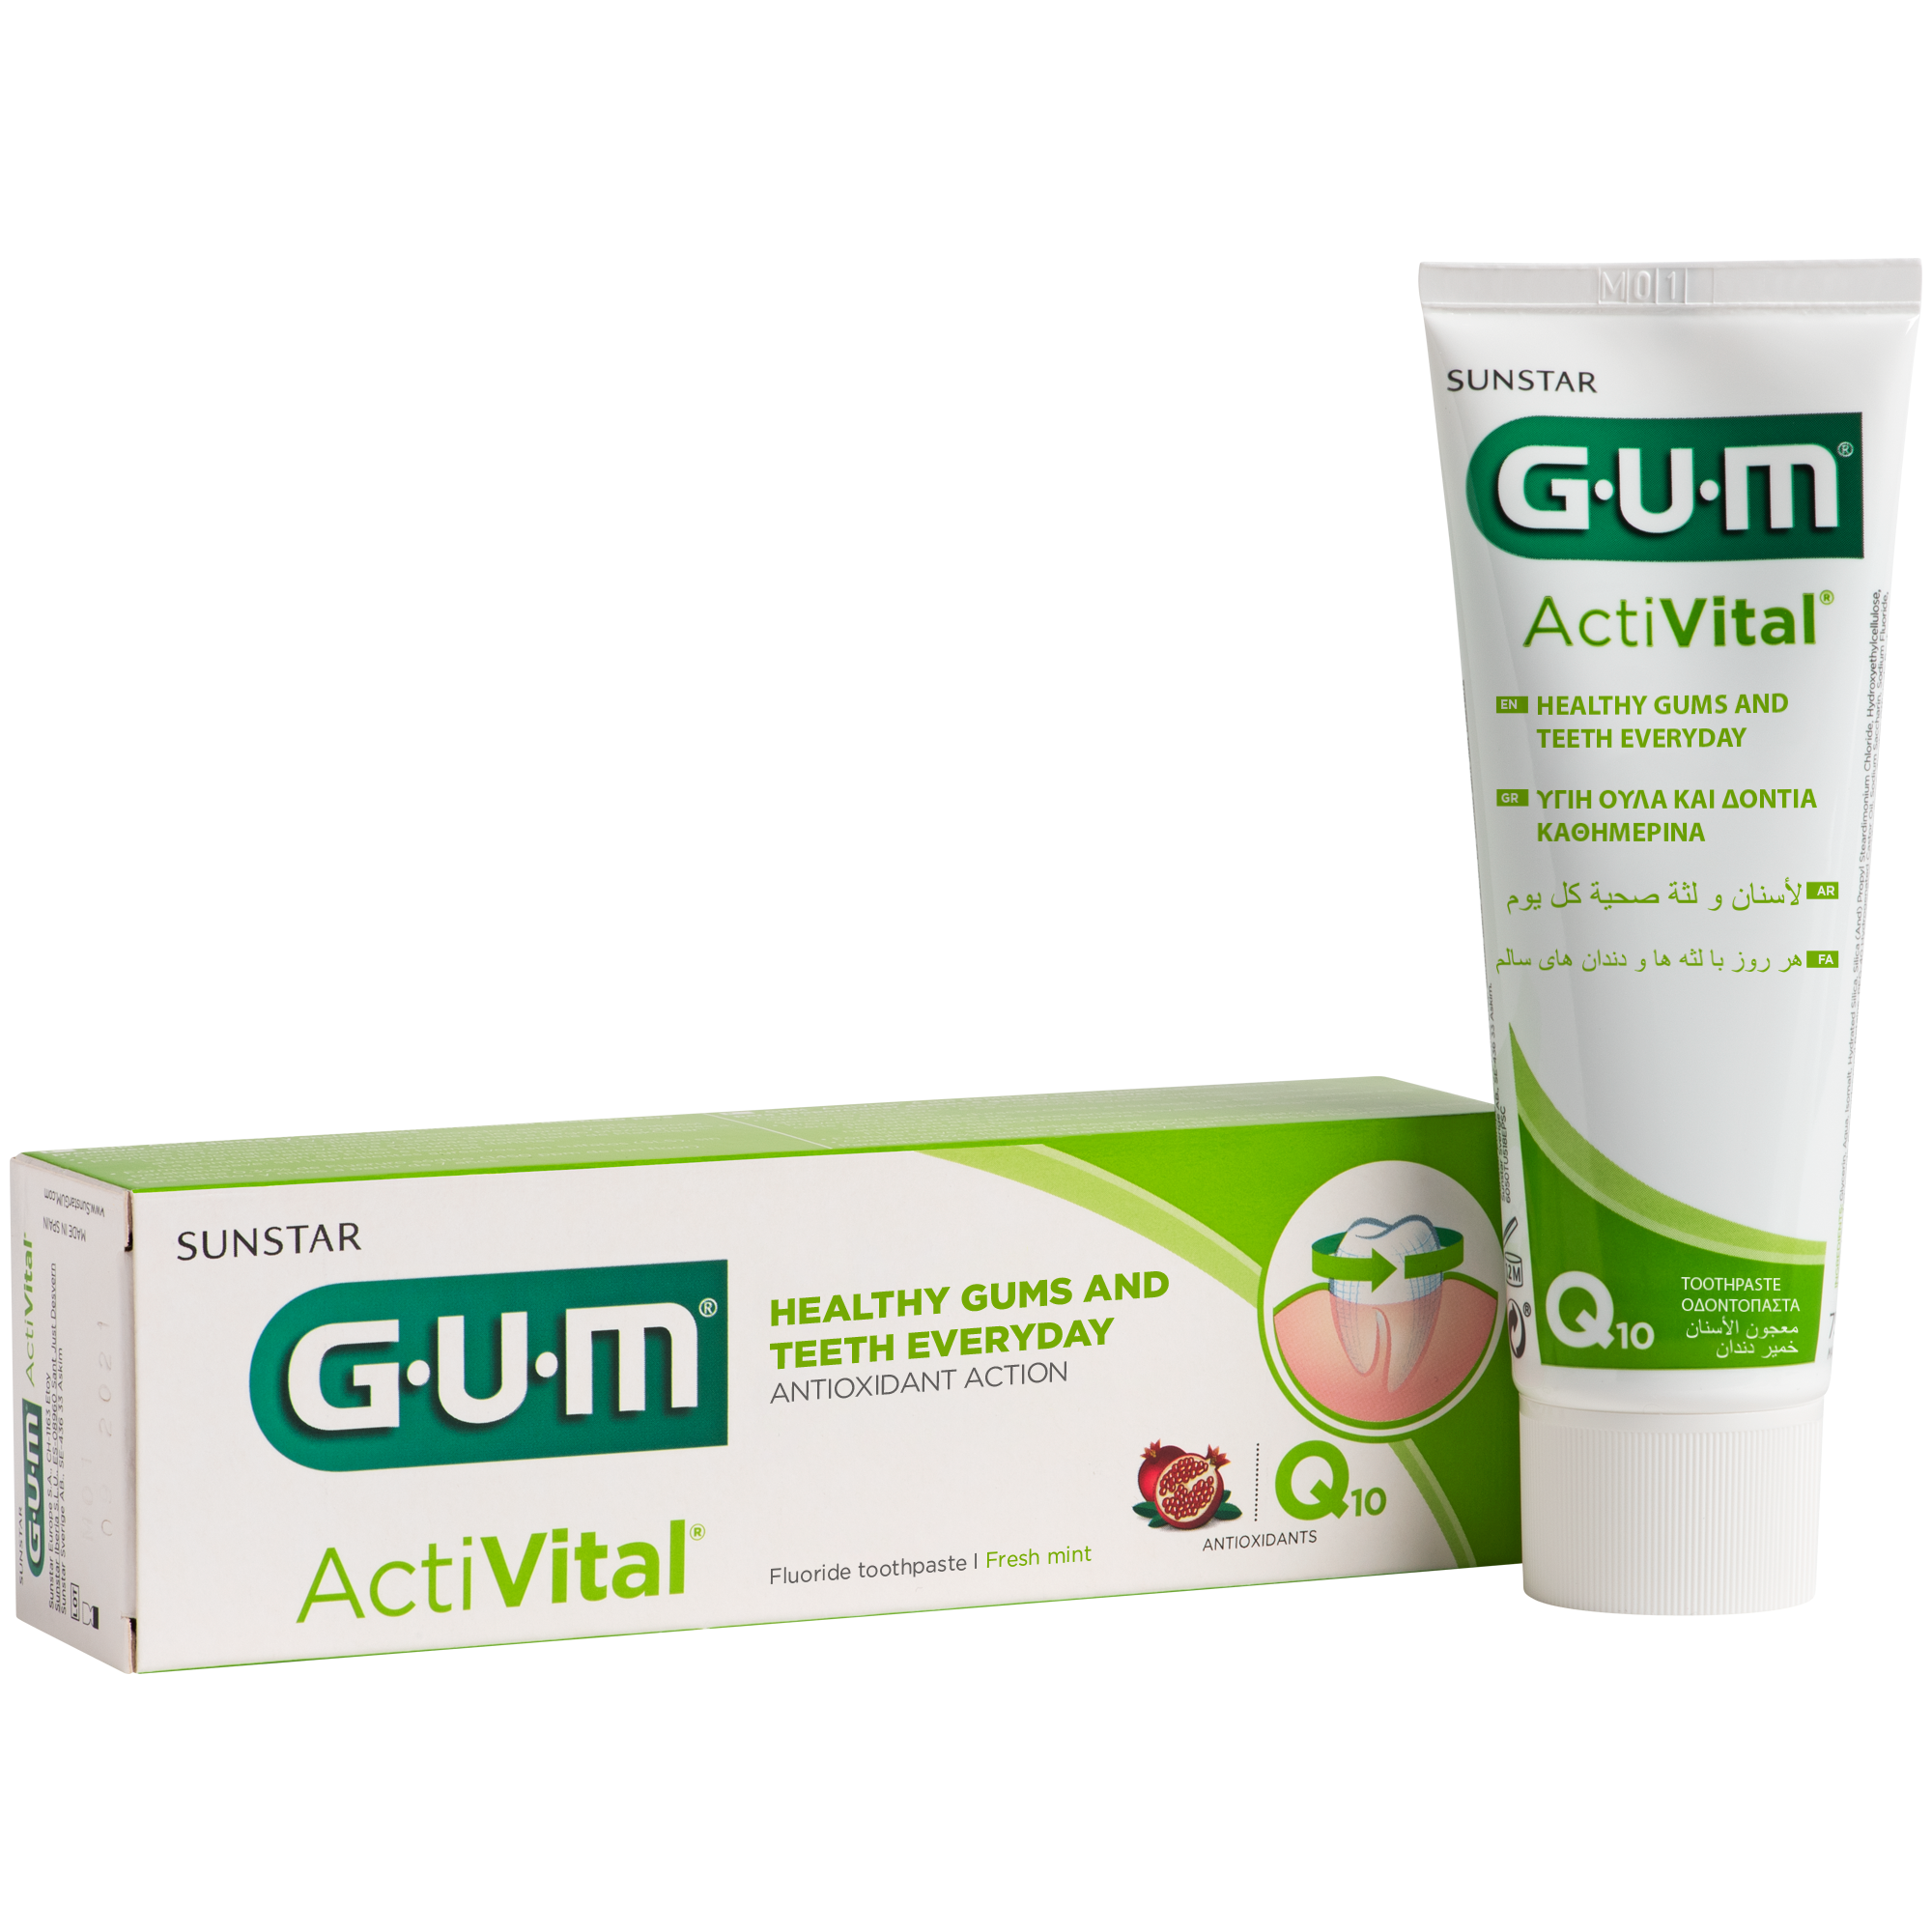 P6050-BDU-GUM-Activital-Toothpaste-75ml-Box-Tube.png